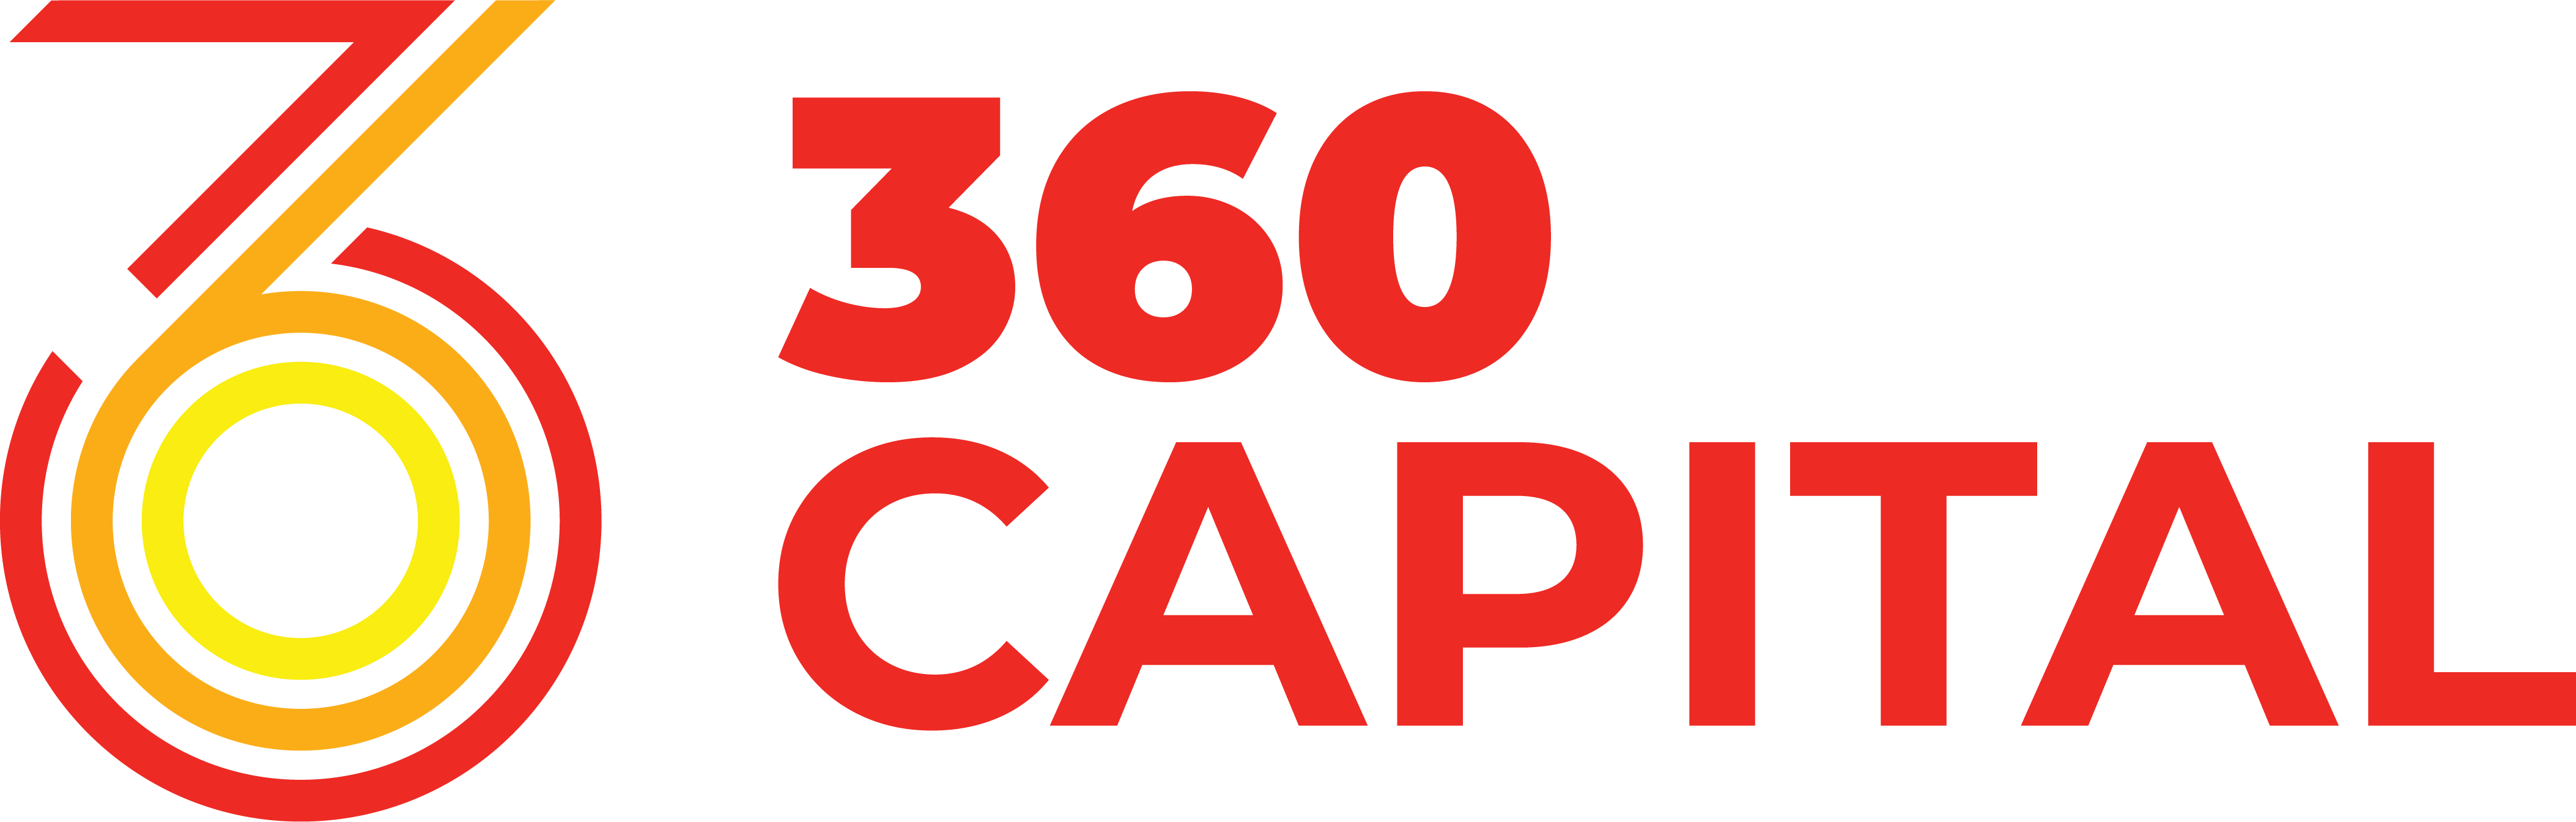 360_Logo-Rectangle_Tri